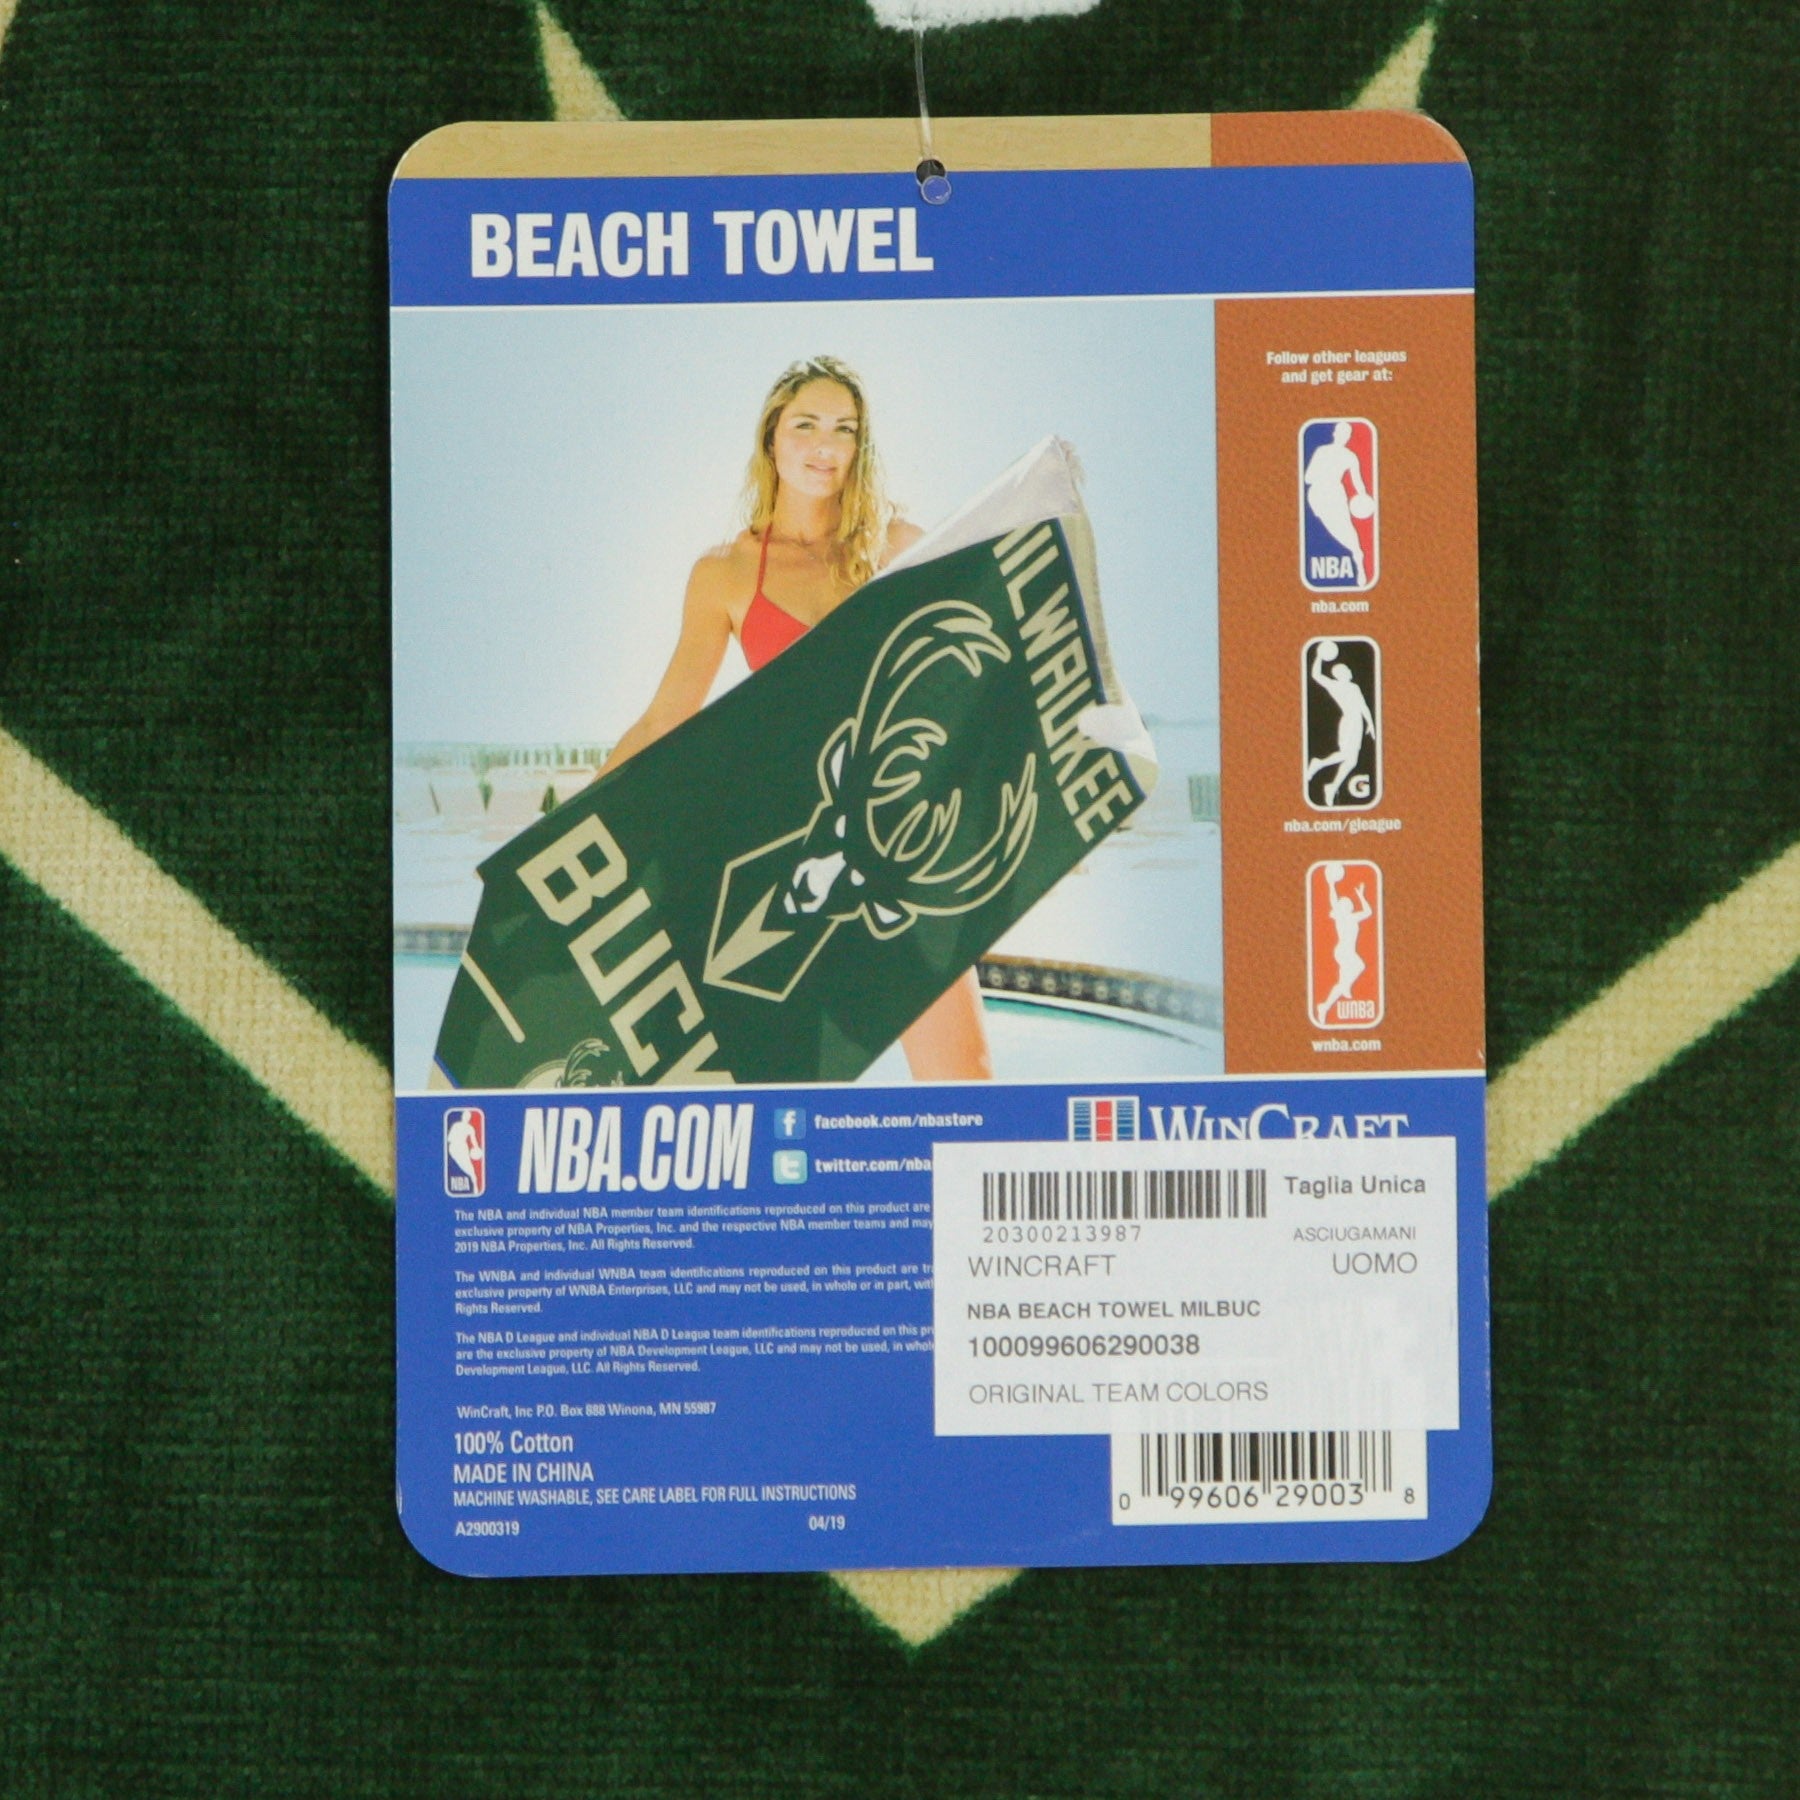 Unisex Nba Beach Towel Milbuc Original Team Colors